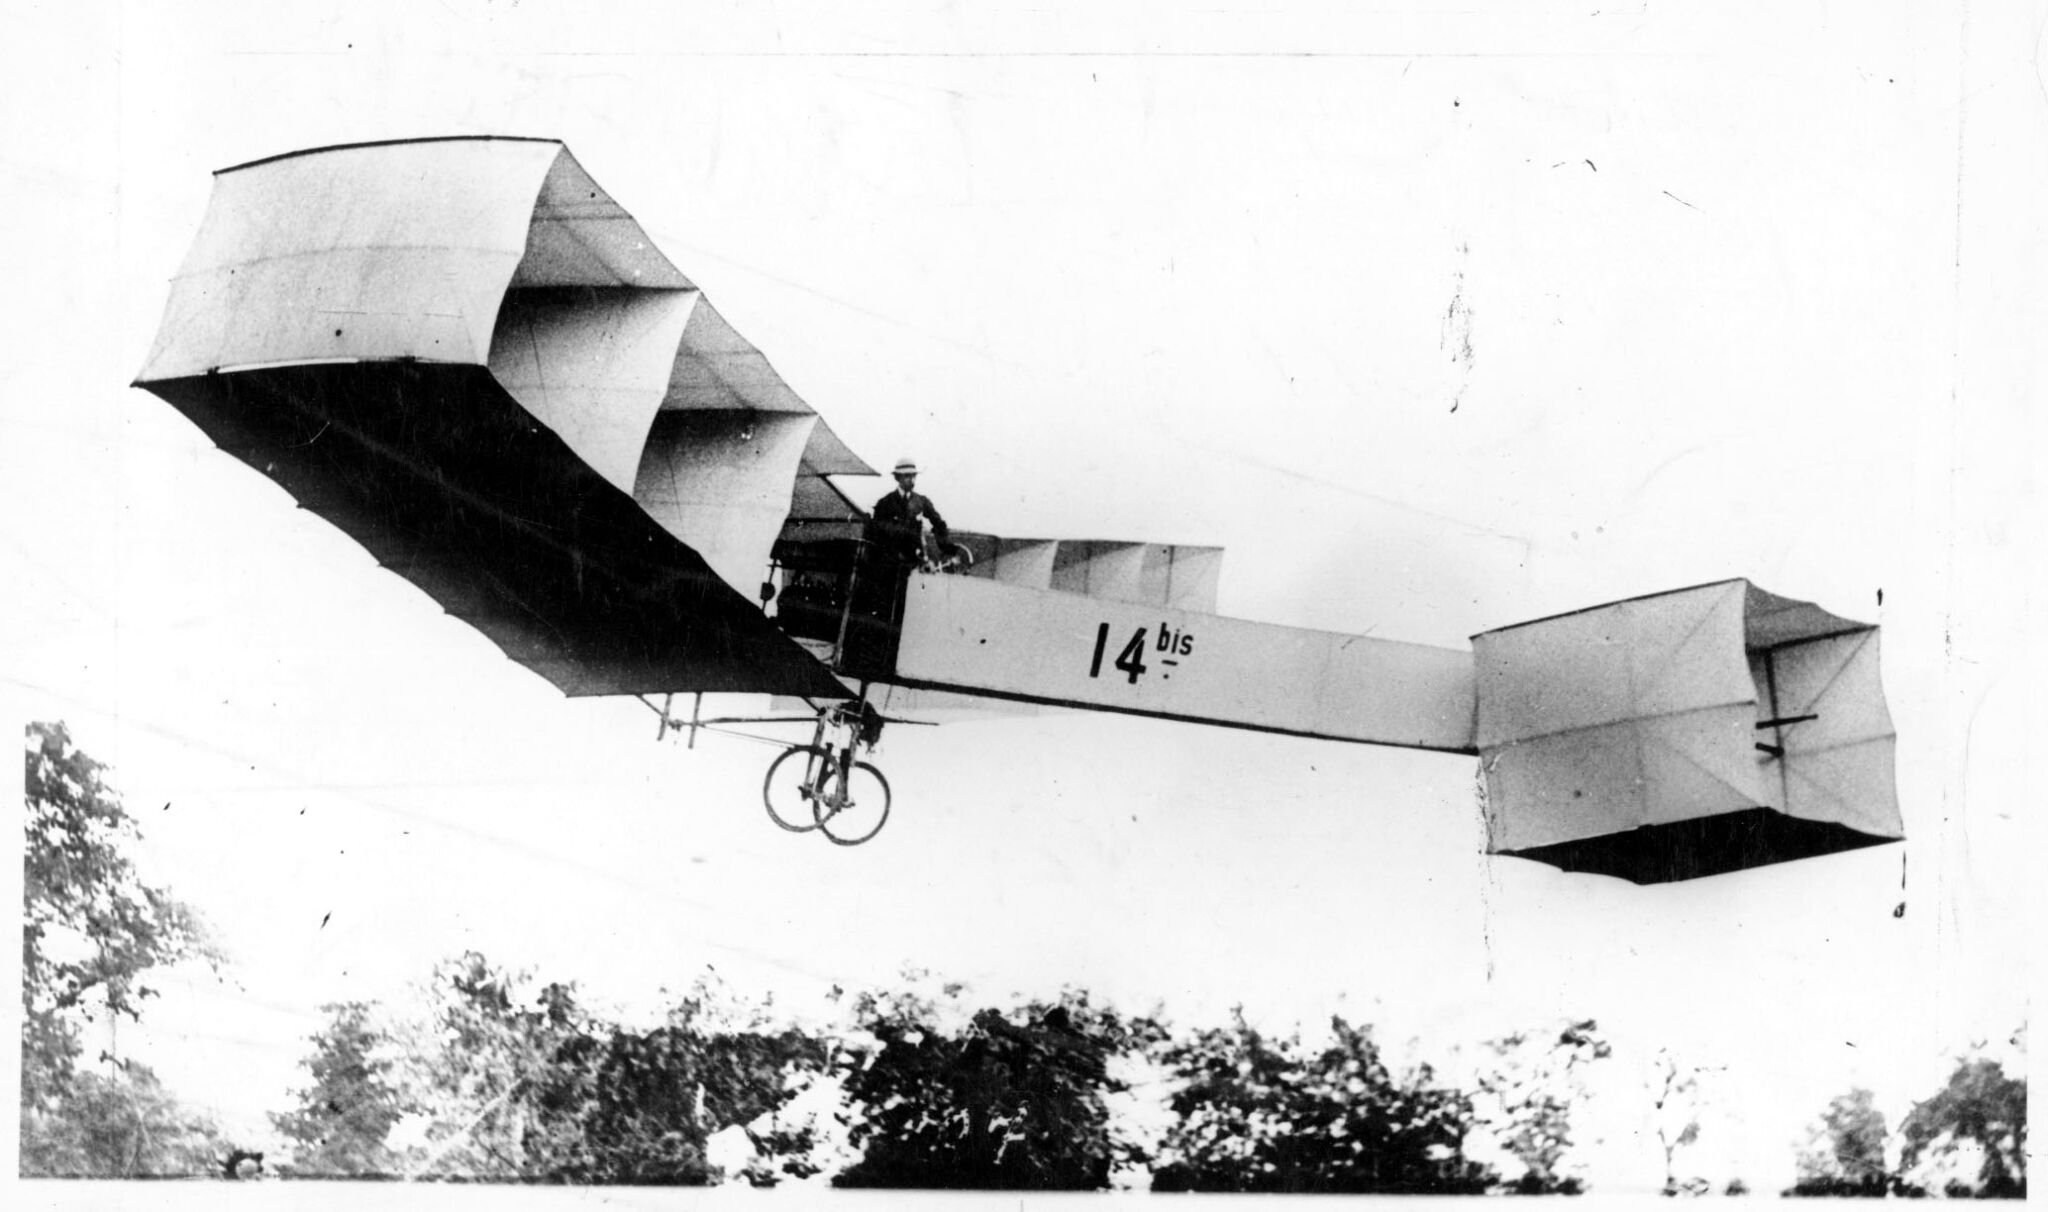 Alberto Santos Dumont voando no avião 14 Bis